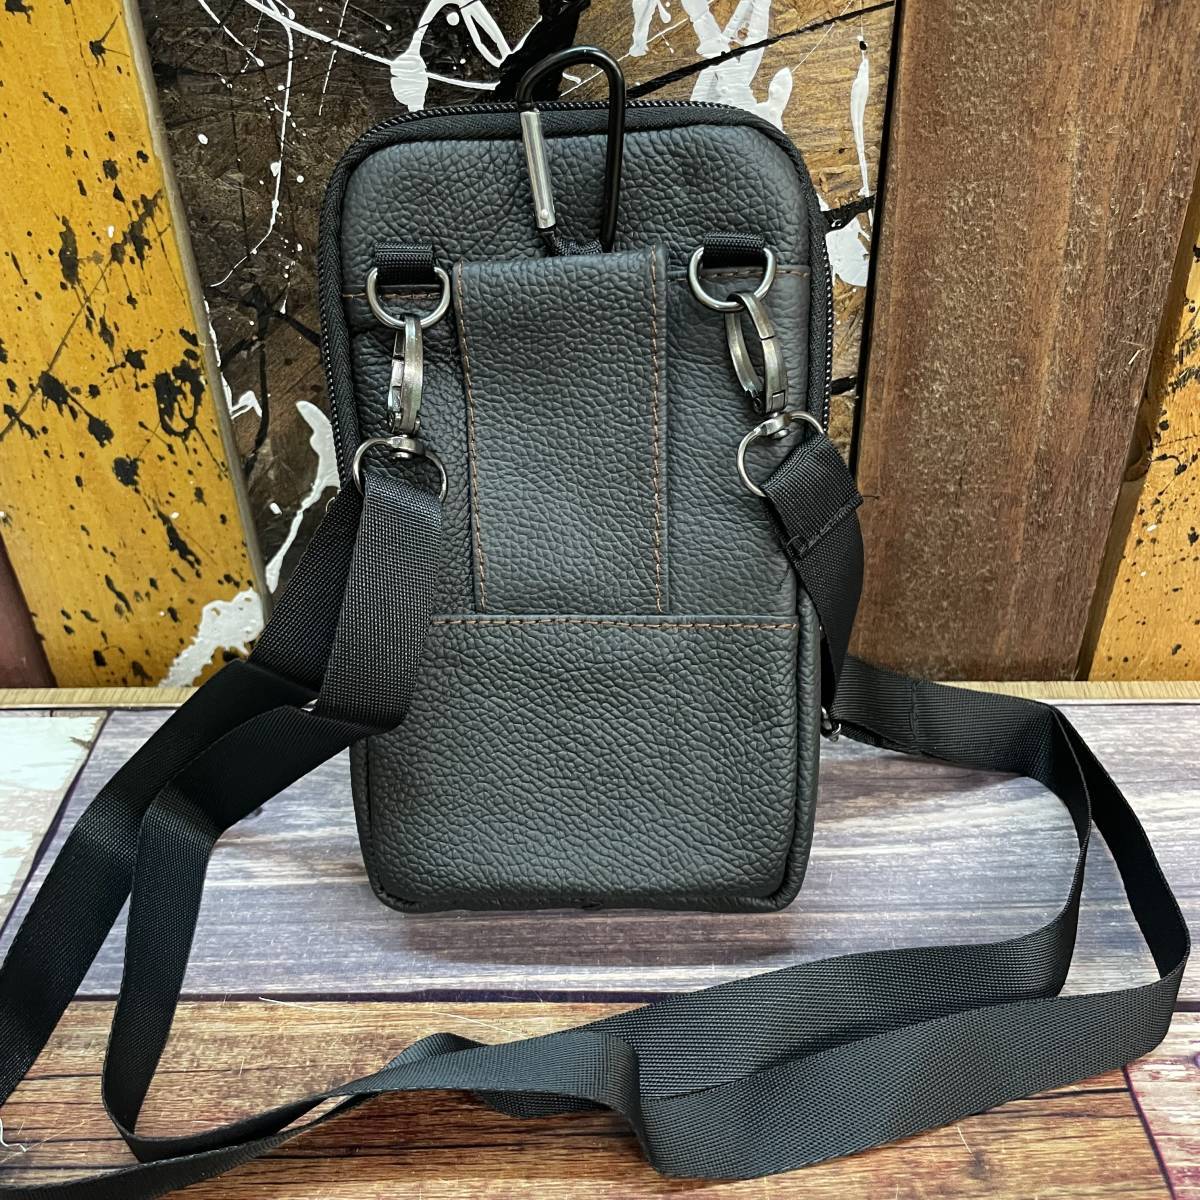  new goods original leather waist bag shoulder bag 2WAY belt pouch mobile telephone smartphone iPhonena ska nkalabina black black free shipping 